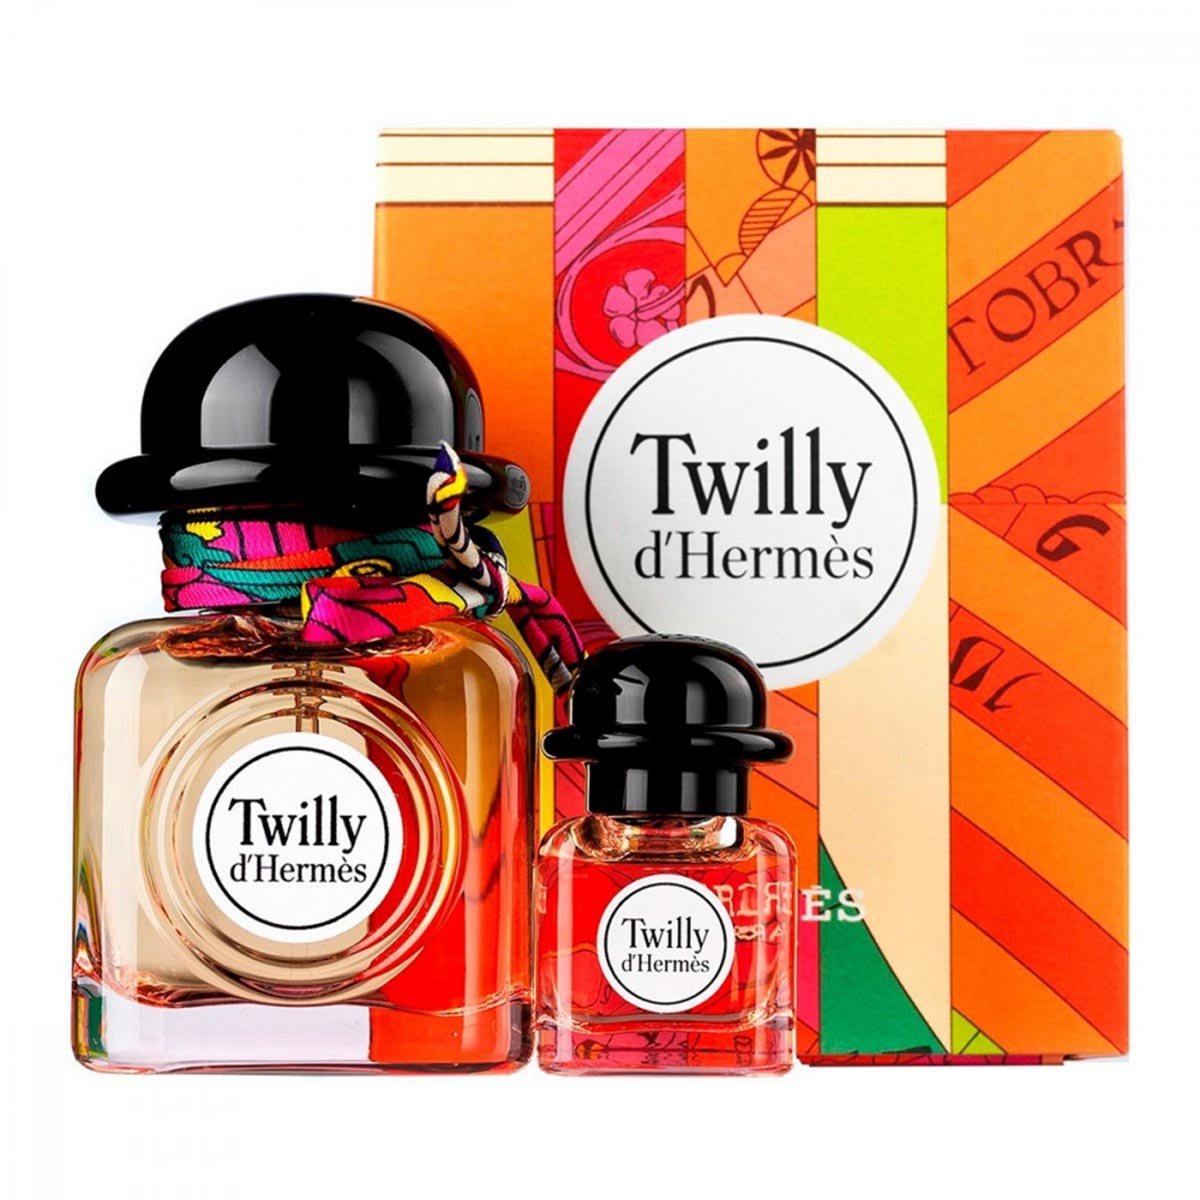 HERMÈS Twilly d'Hermes Gift Set - My Perfume Shop Australia